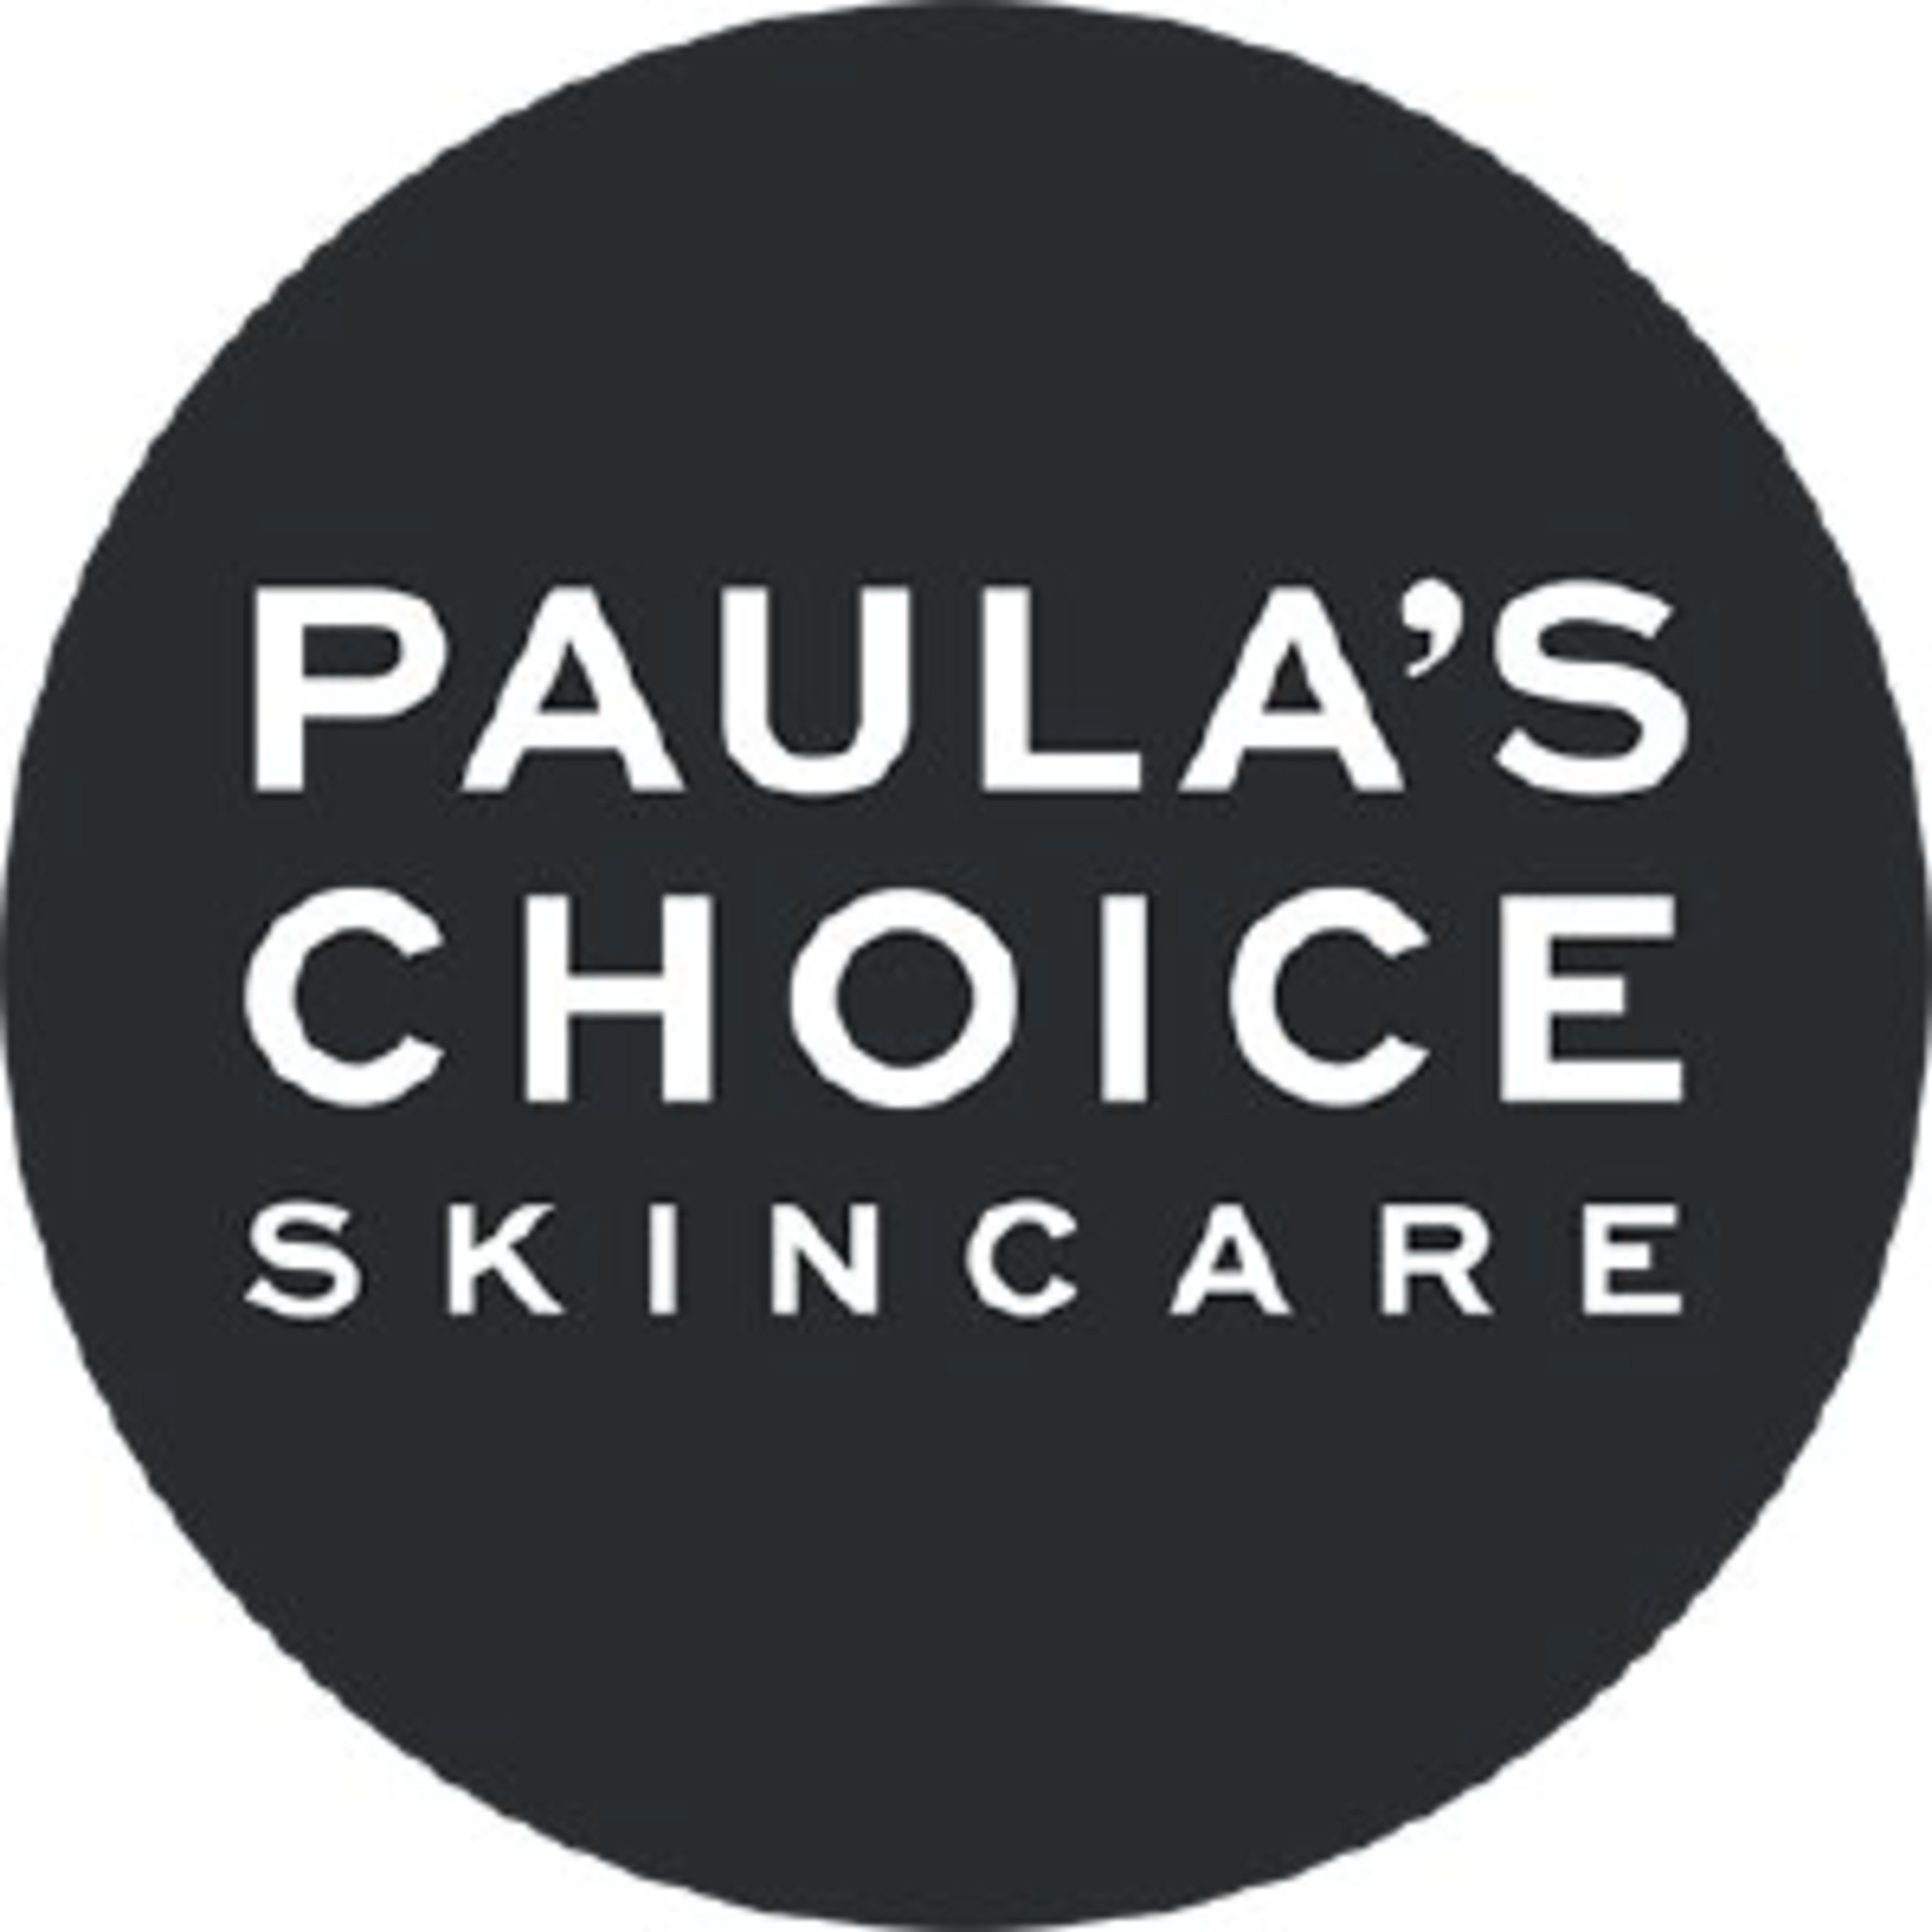 Paula's Choice SkincareCode